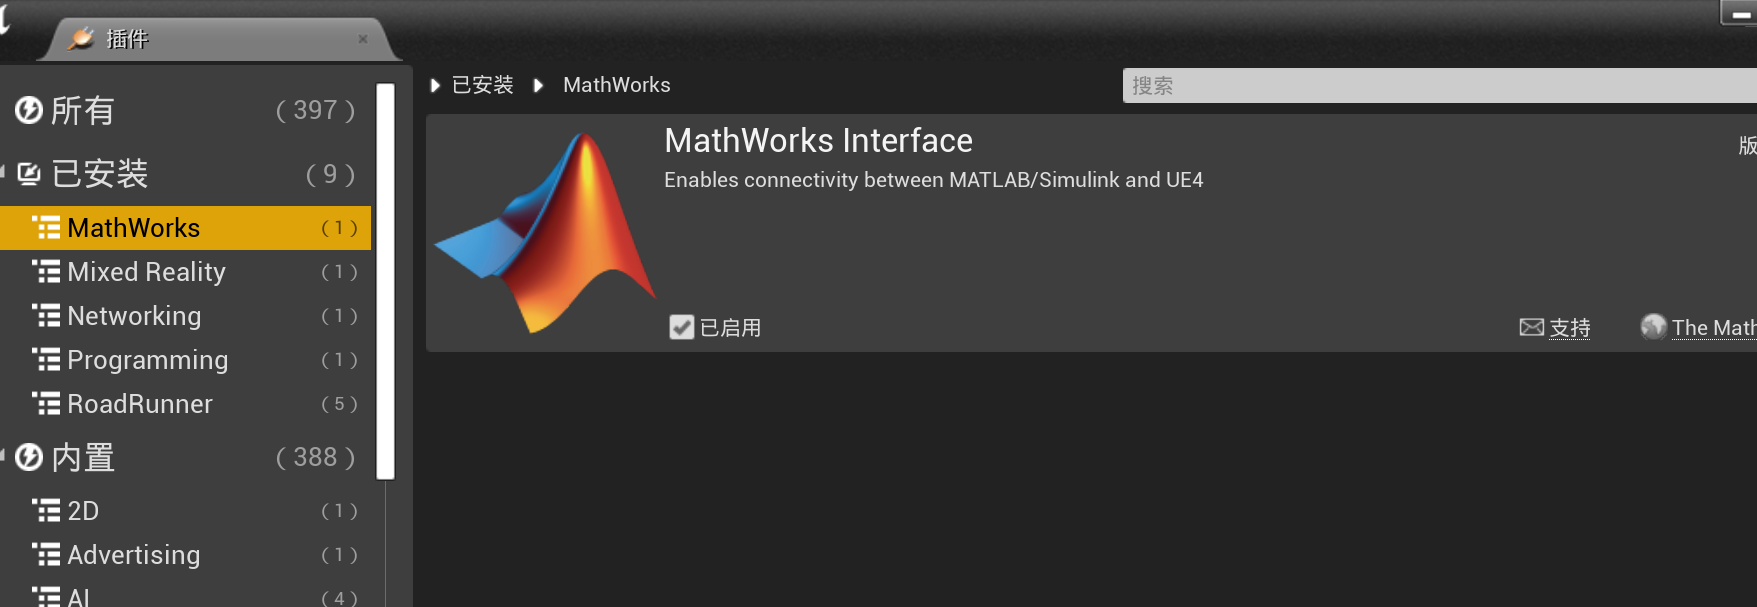 启用MathWorks